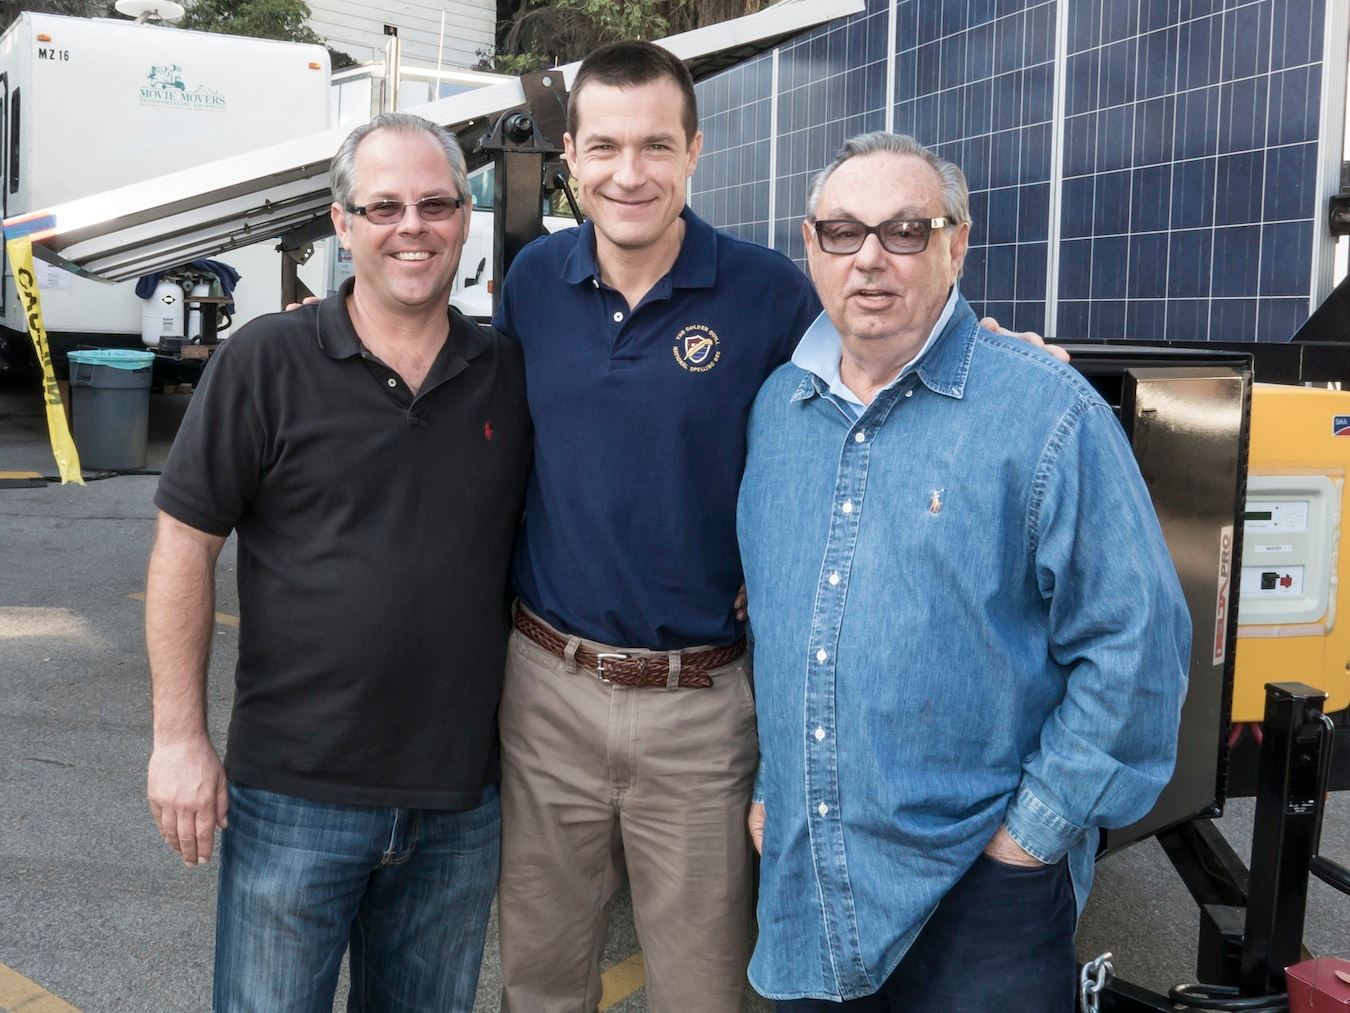 Jason Bateman in front of mobile solar trailer. 